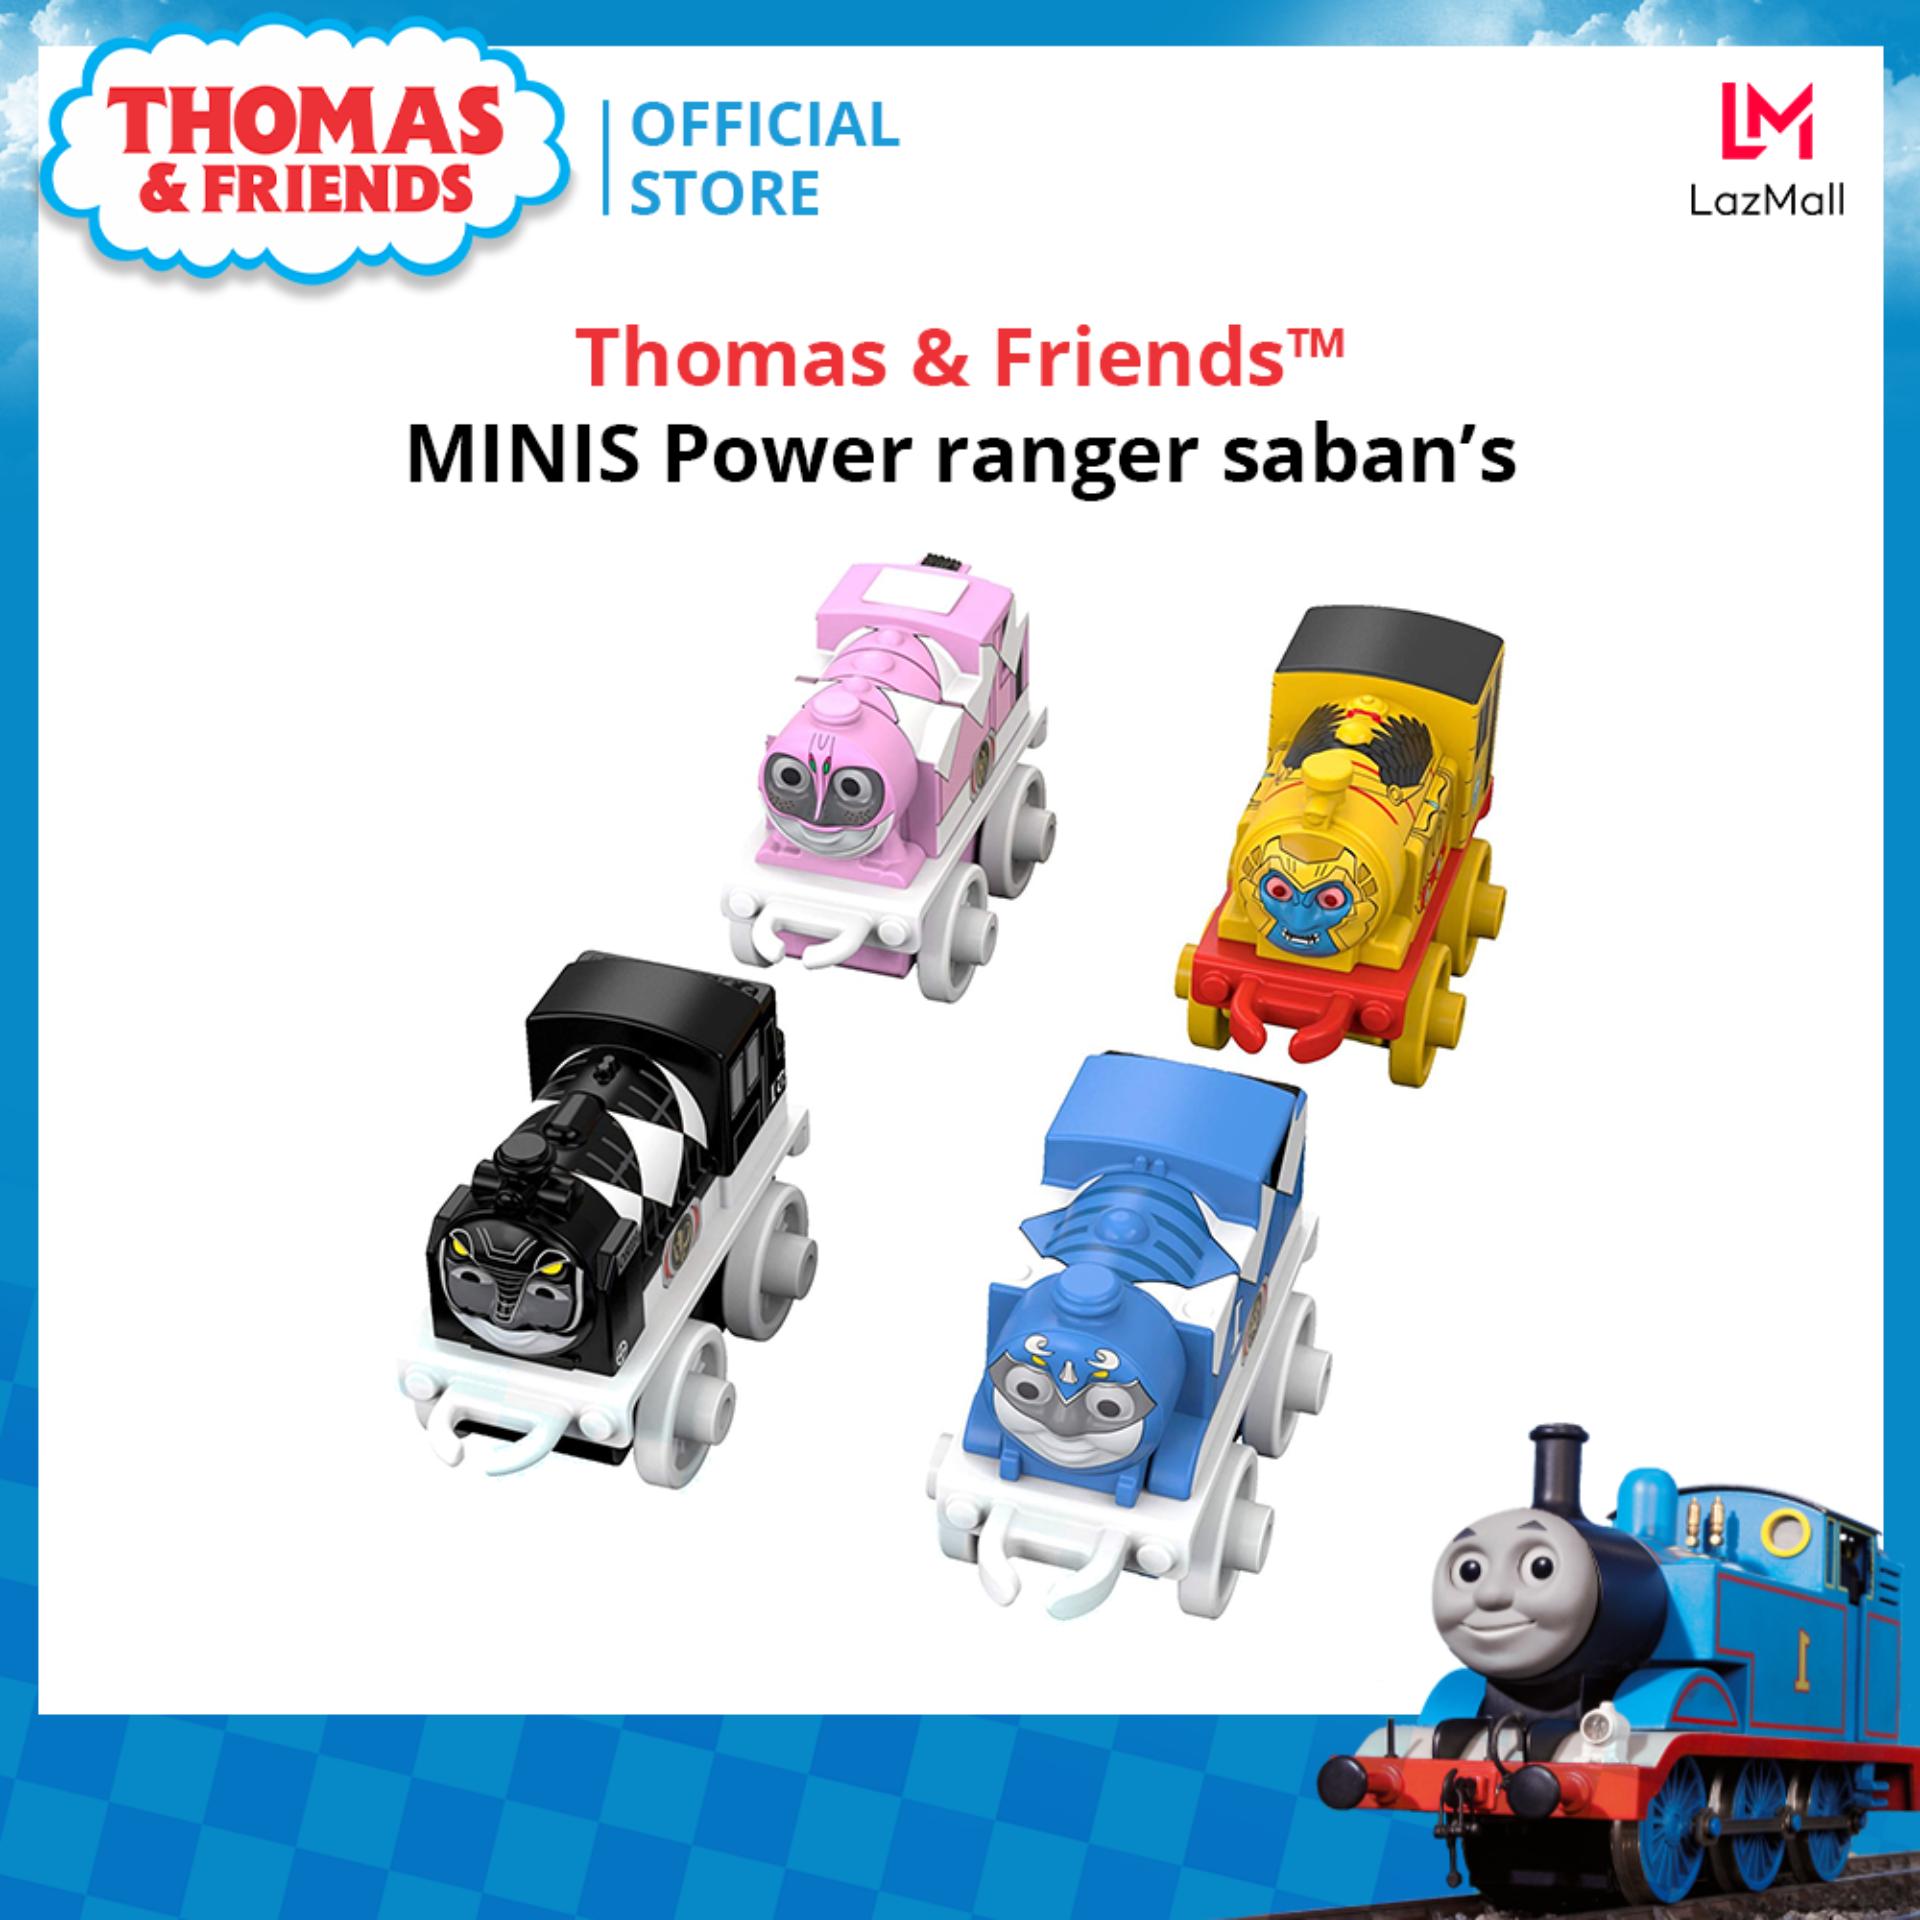 Thomas & Friends MINIS, Mighty Morphin Power Rangers โทมัส แอนด์ เฟรนด์ 1ชุด 4 ตัว ของเล่น ของเล่นเด็ก